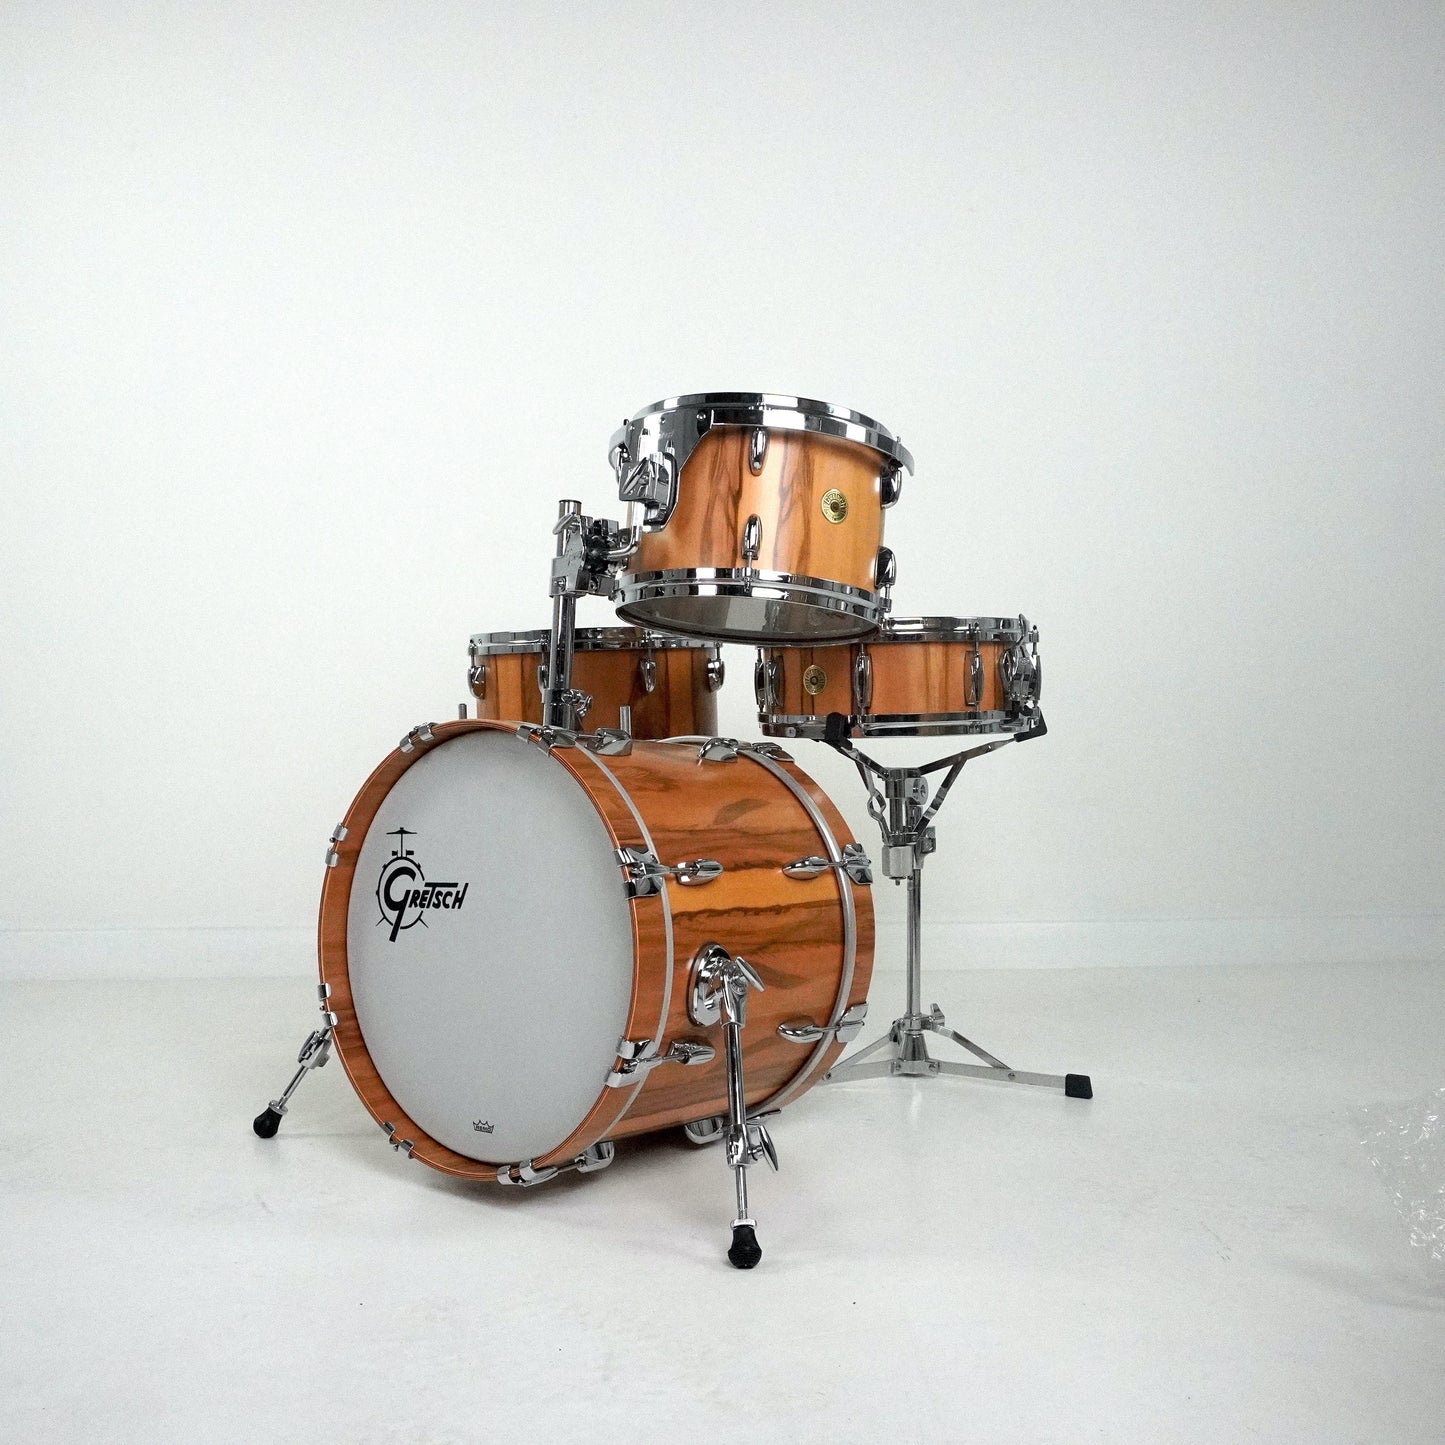 Gretsch USA Custom Red Gum Wood Limited Edition Drum Kit 18,12,14